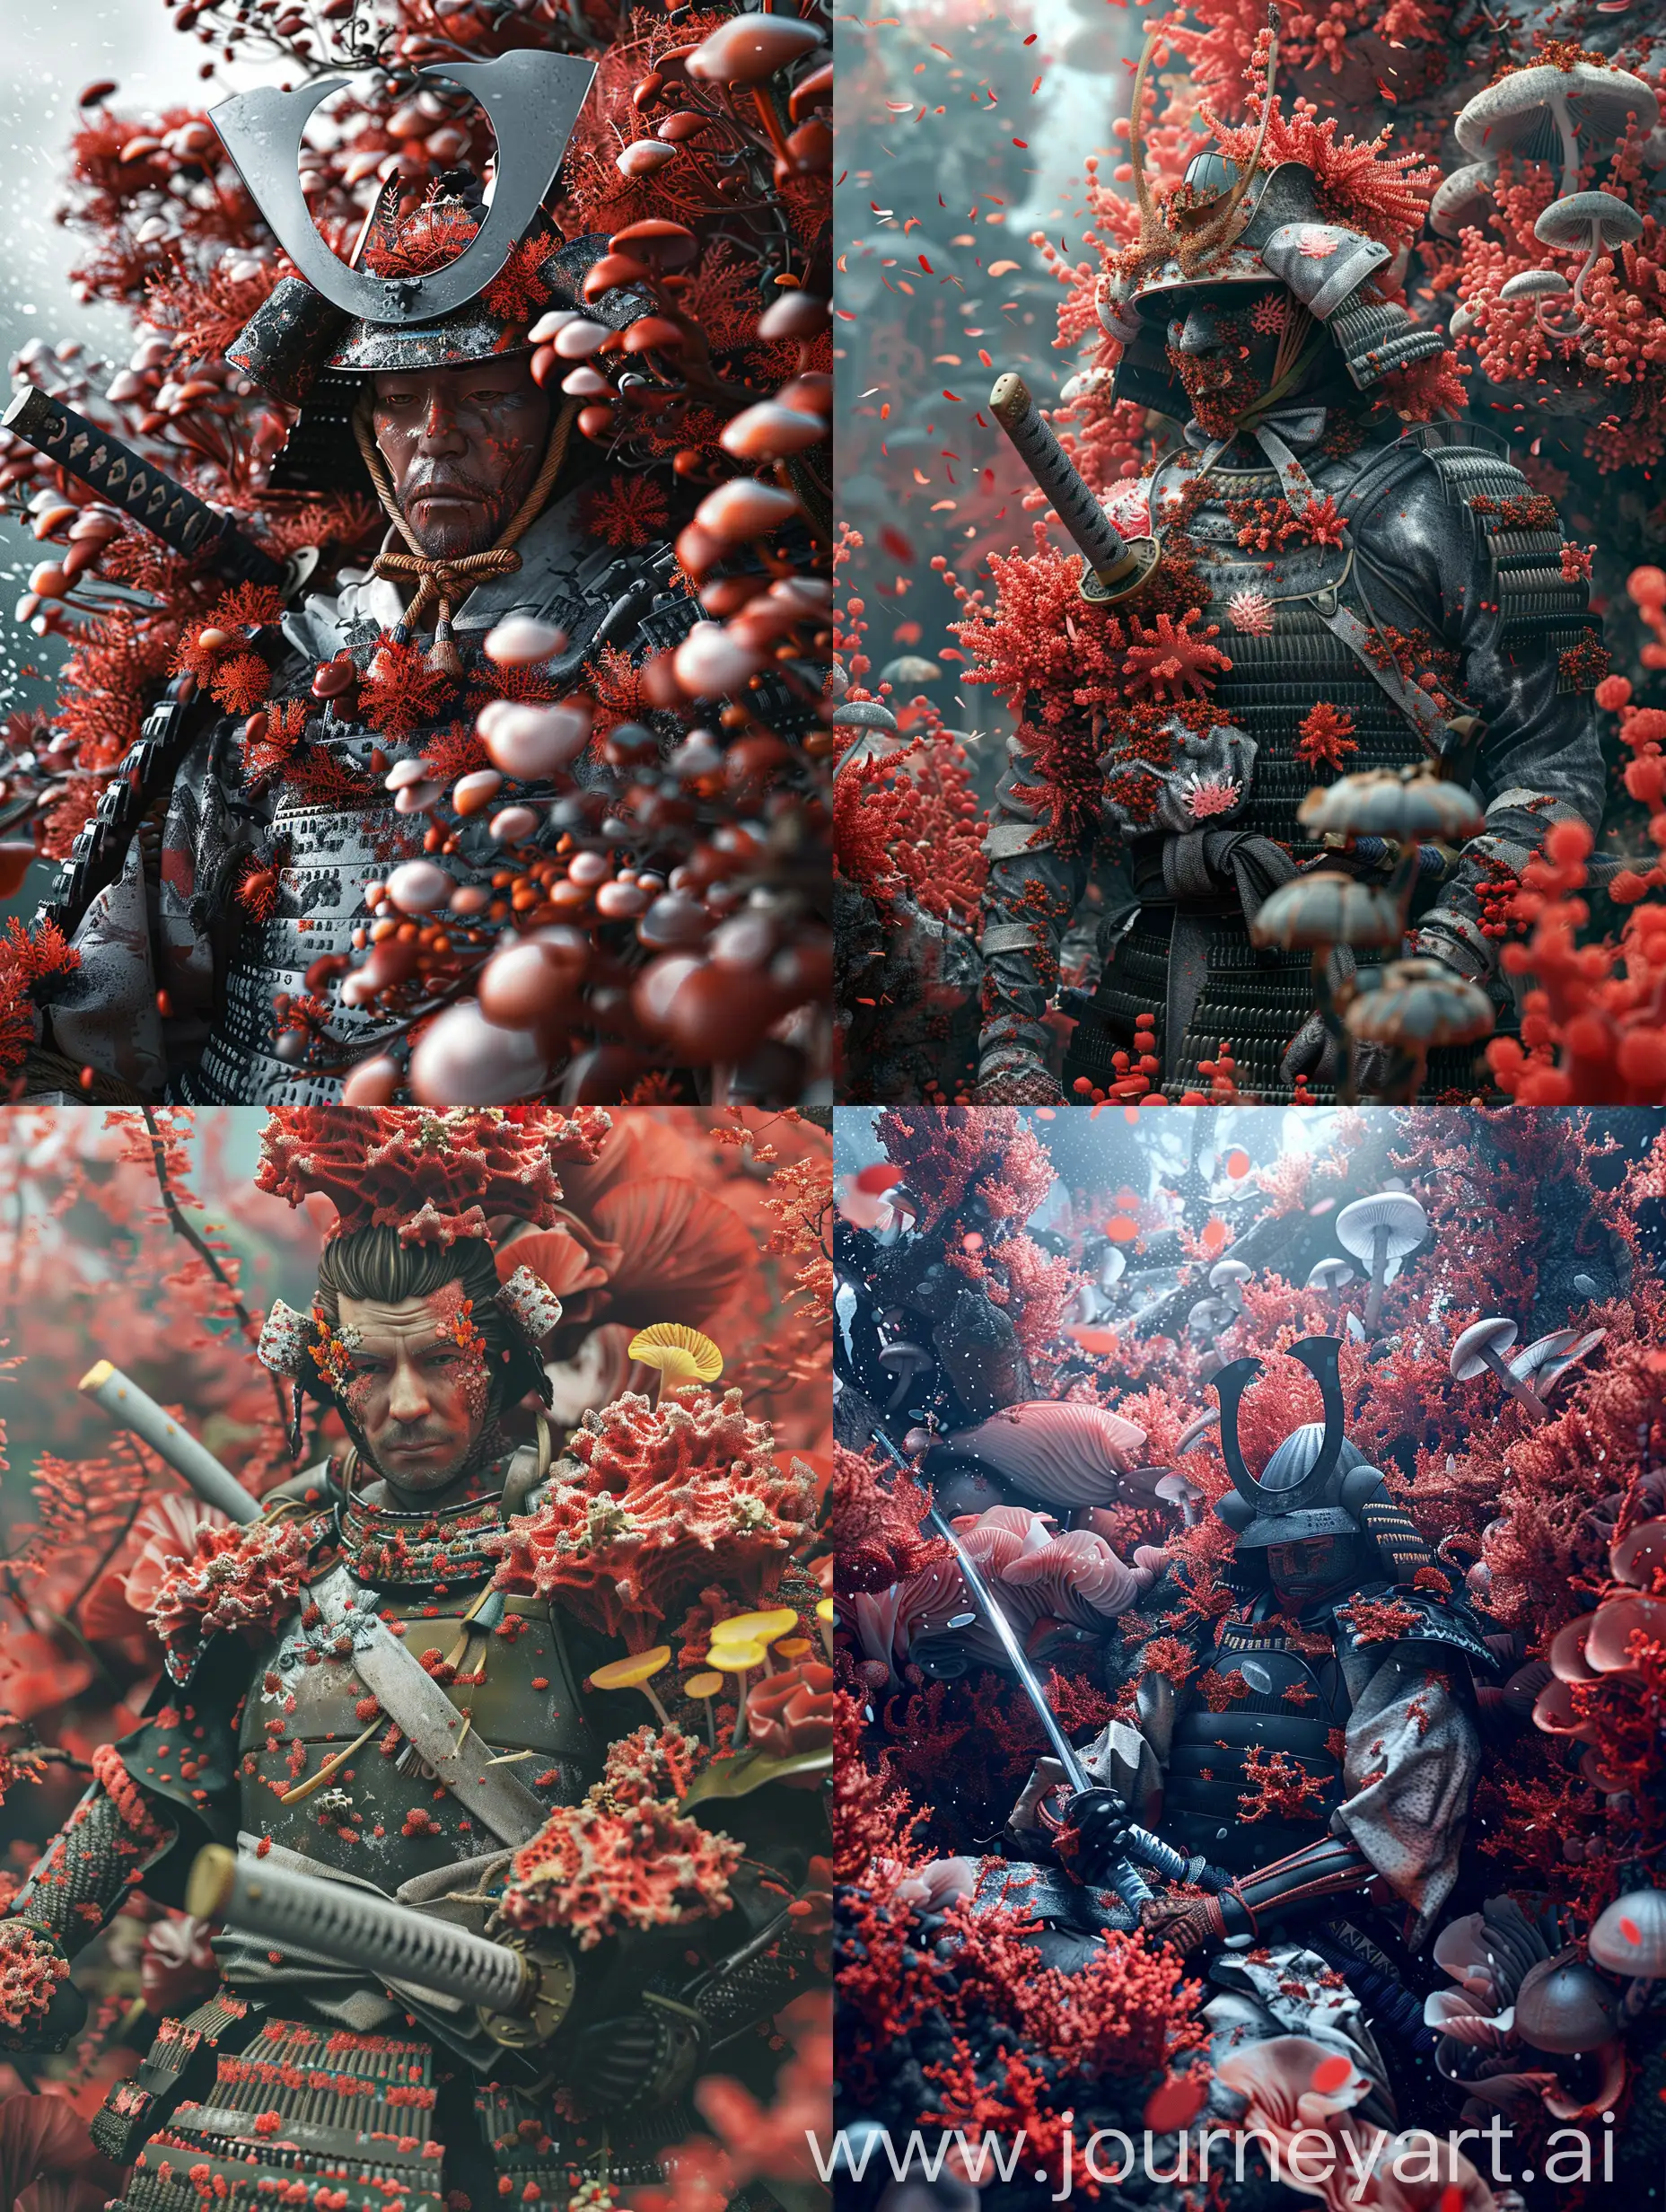 Hyper-Realistic-Samurai-Enveloped-in-Vibrant-Red-Fluorescent-Coral-and-Fungi